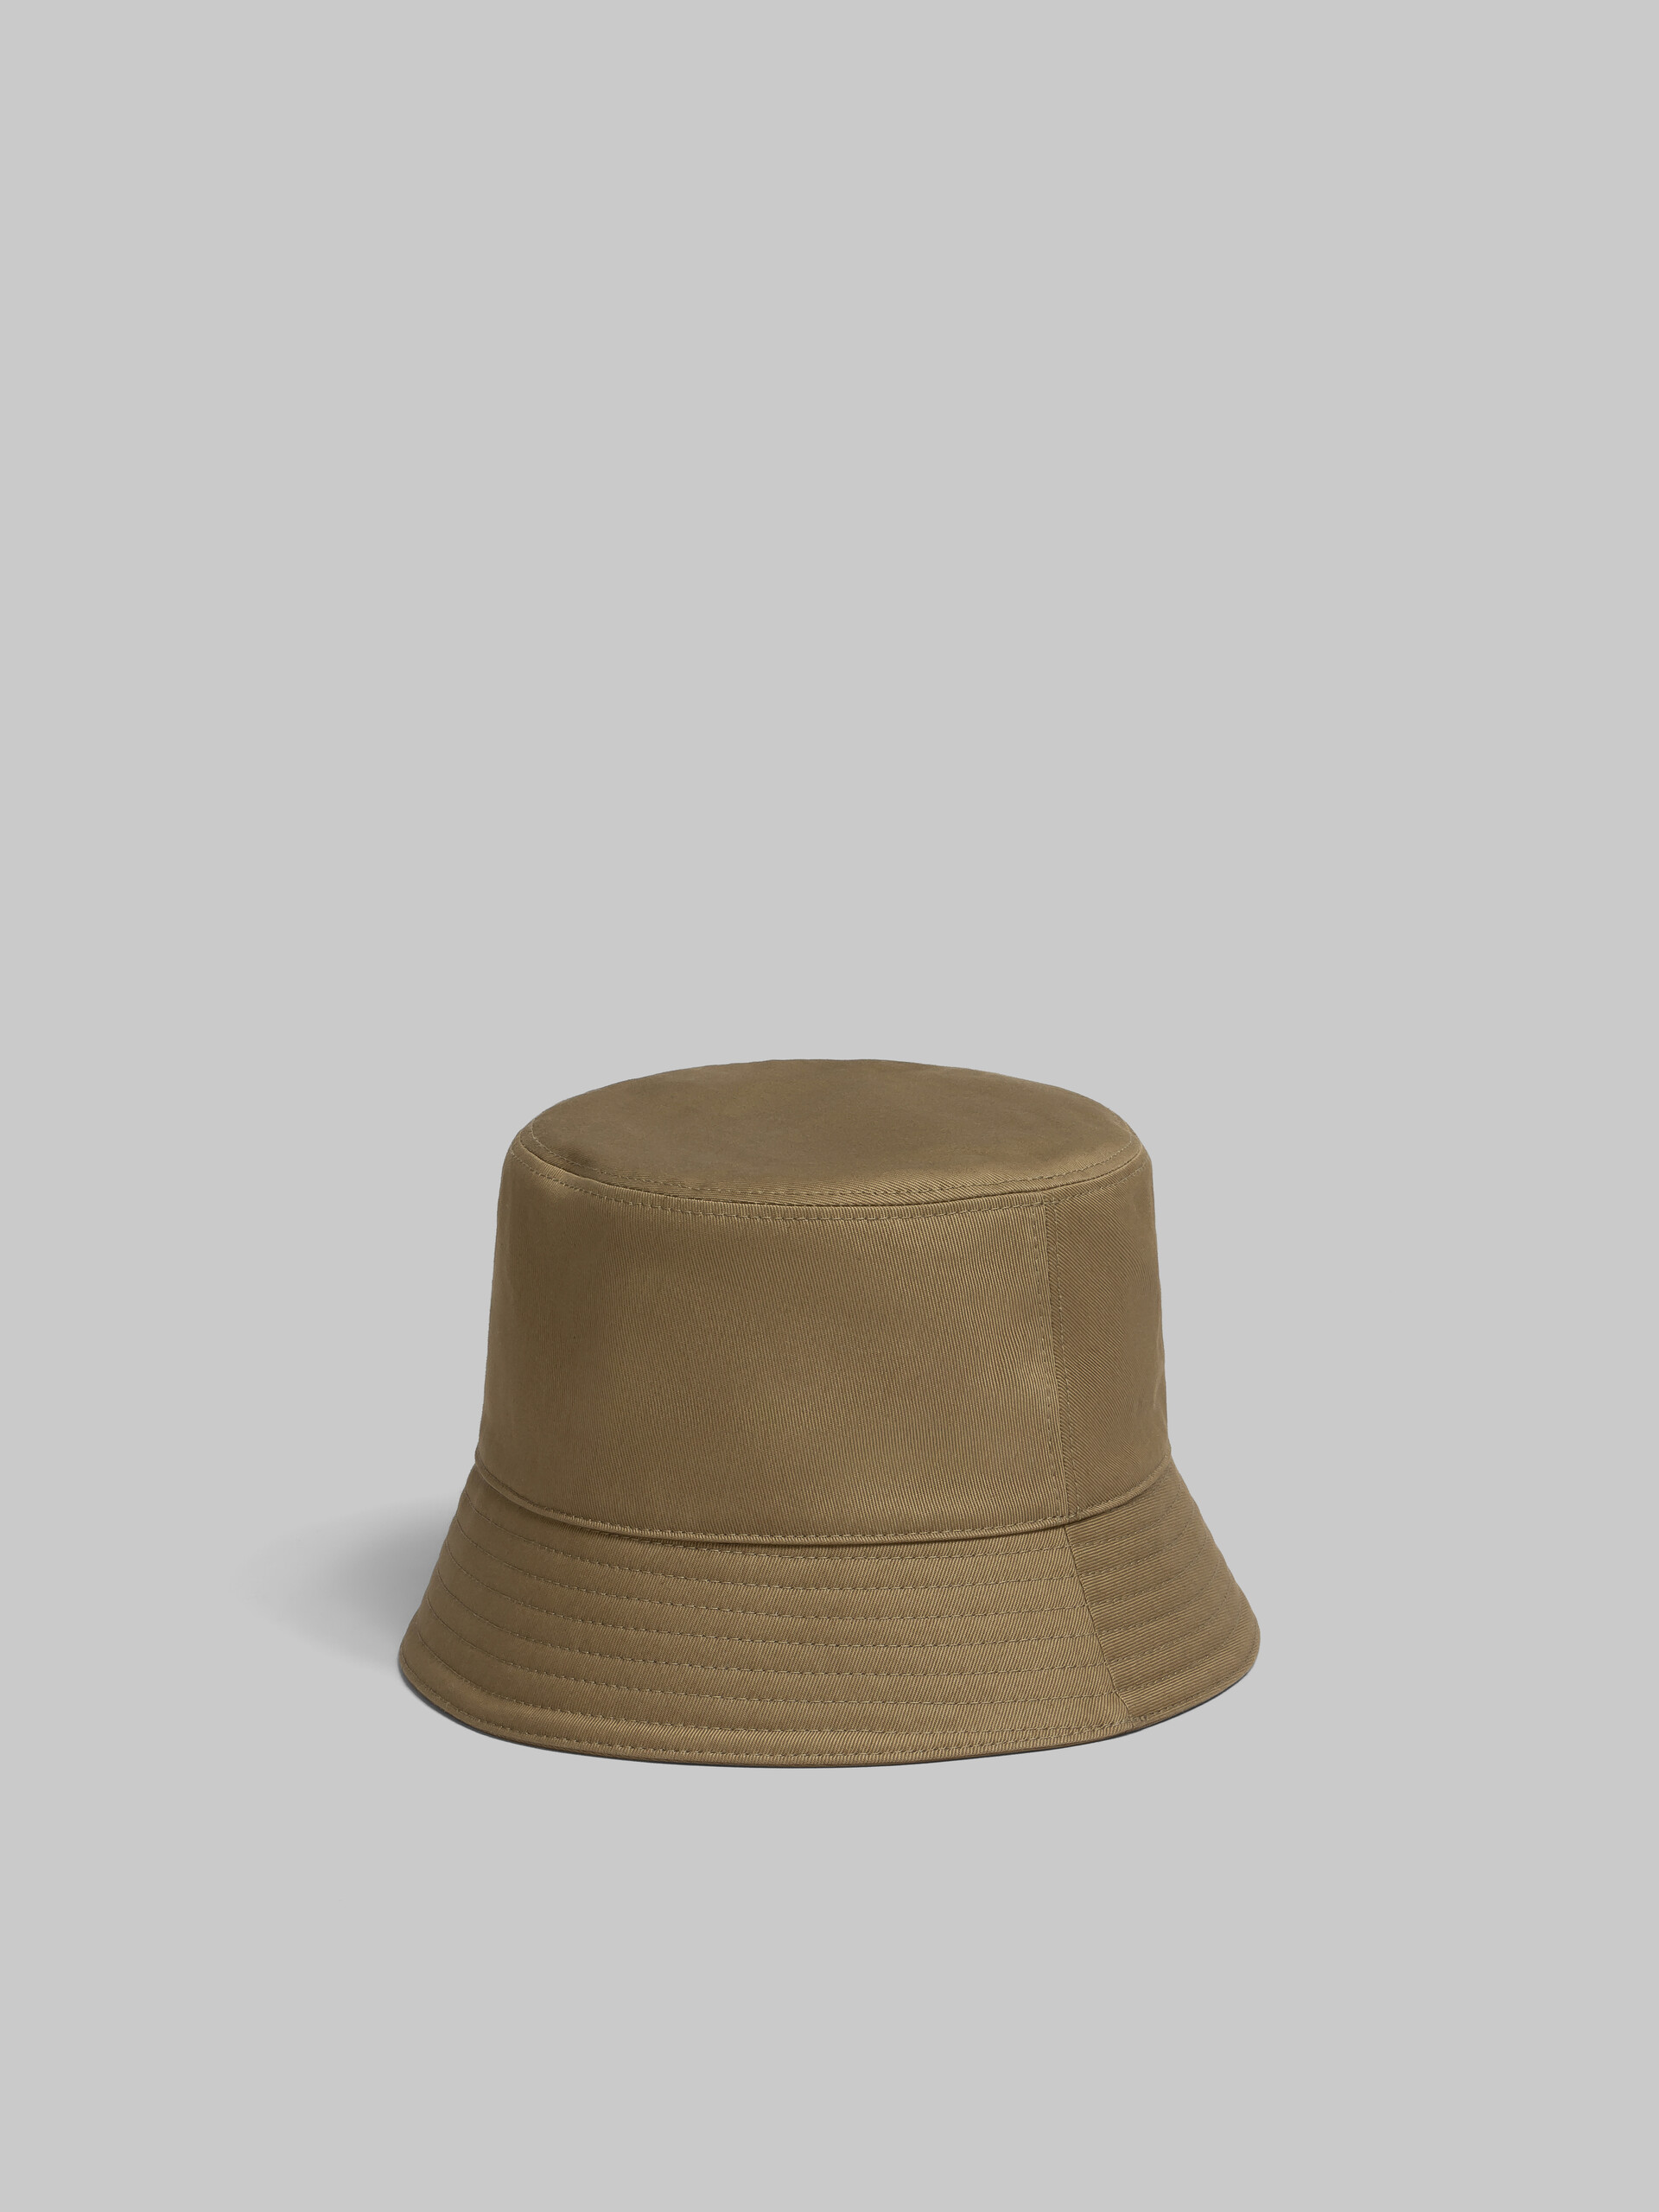 Black organic gabardine bucket hat with embroidered logo - Hats - Image 3